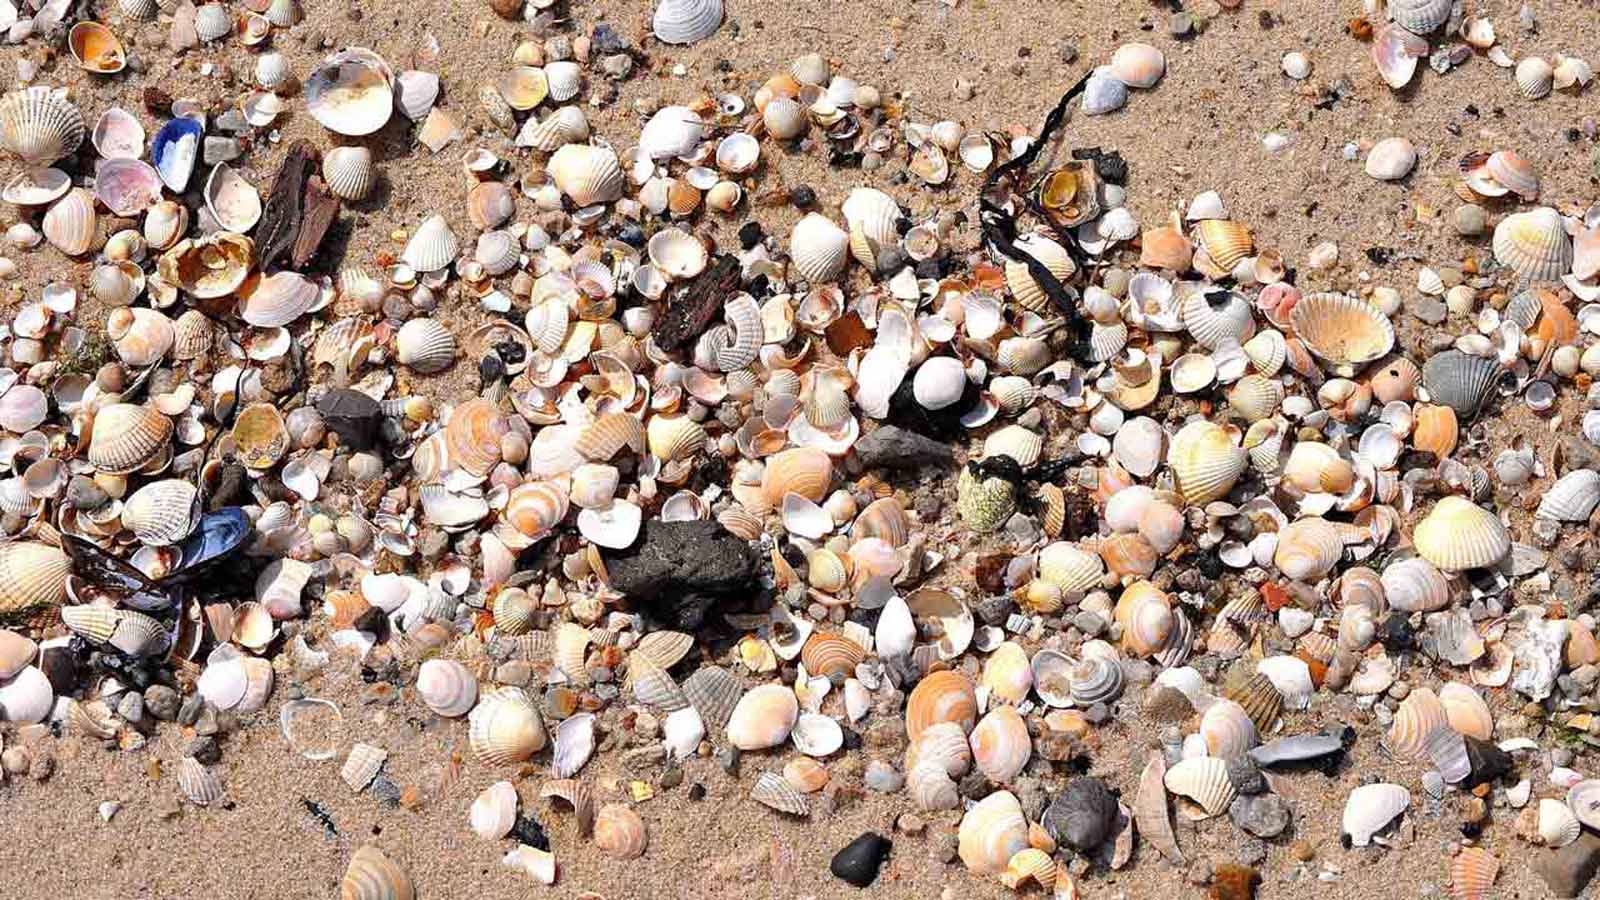 DISL To Host Beach Plastic Exploration And Movie